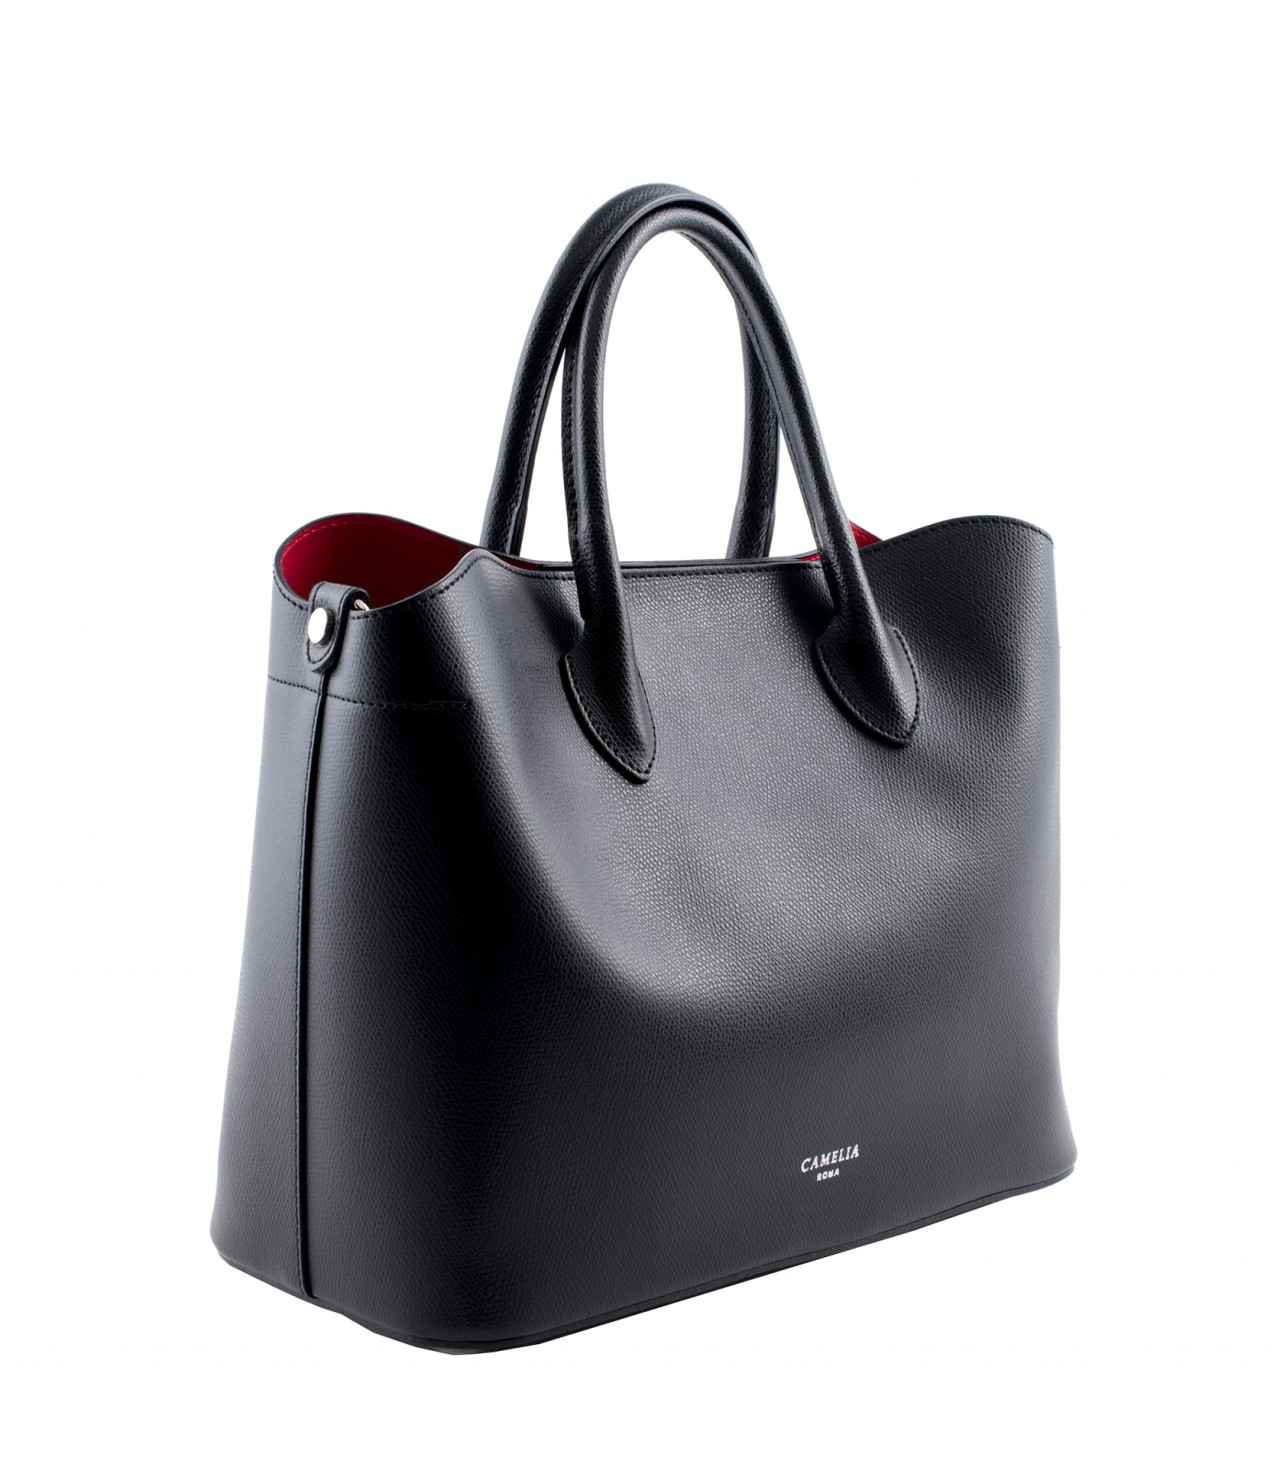 Leather handbag - Camelia Roma